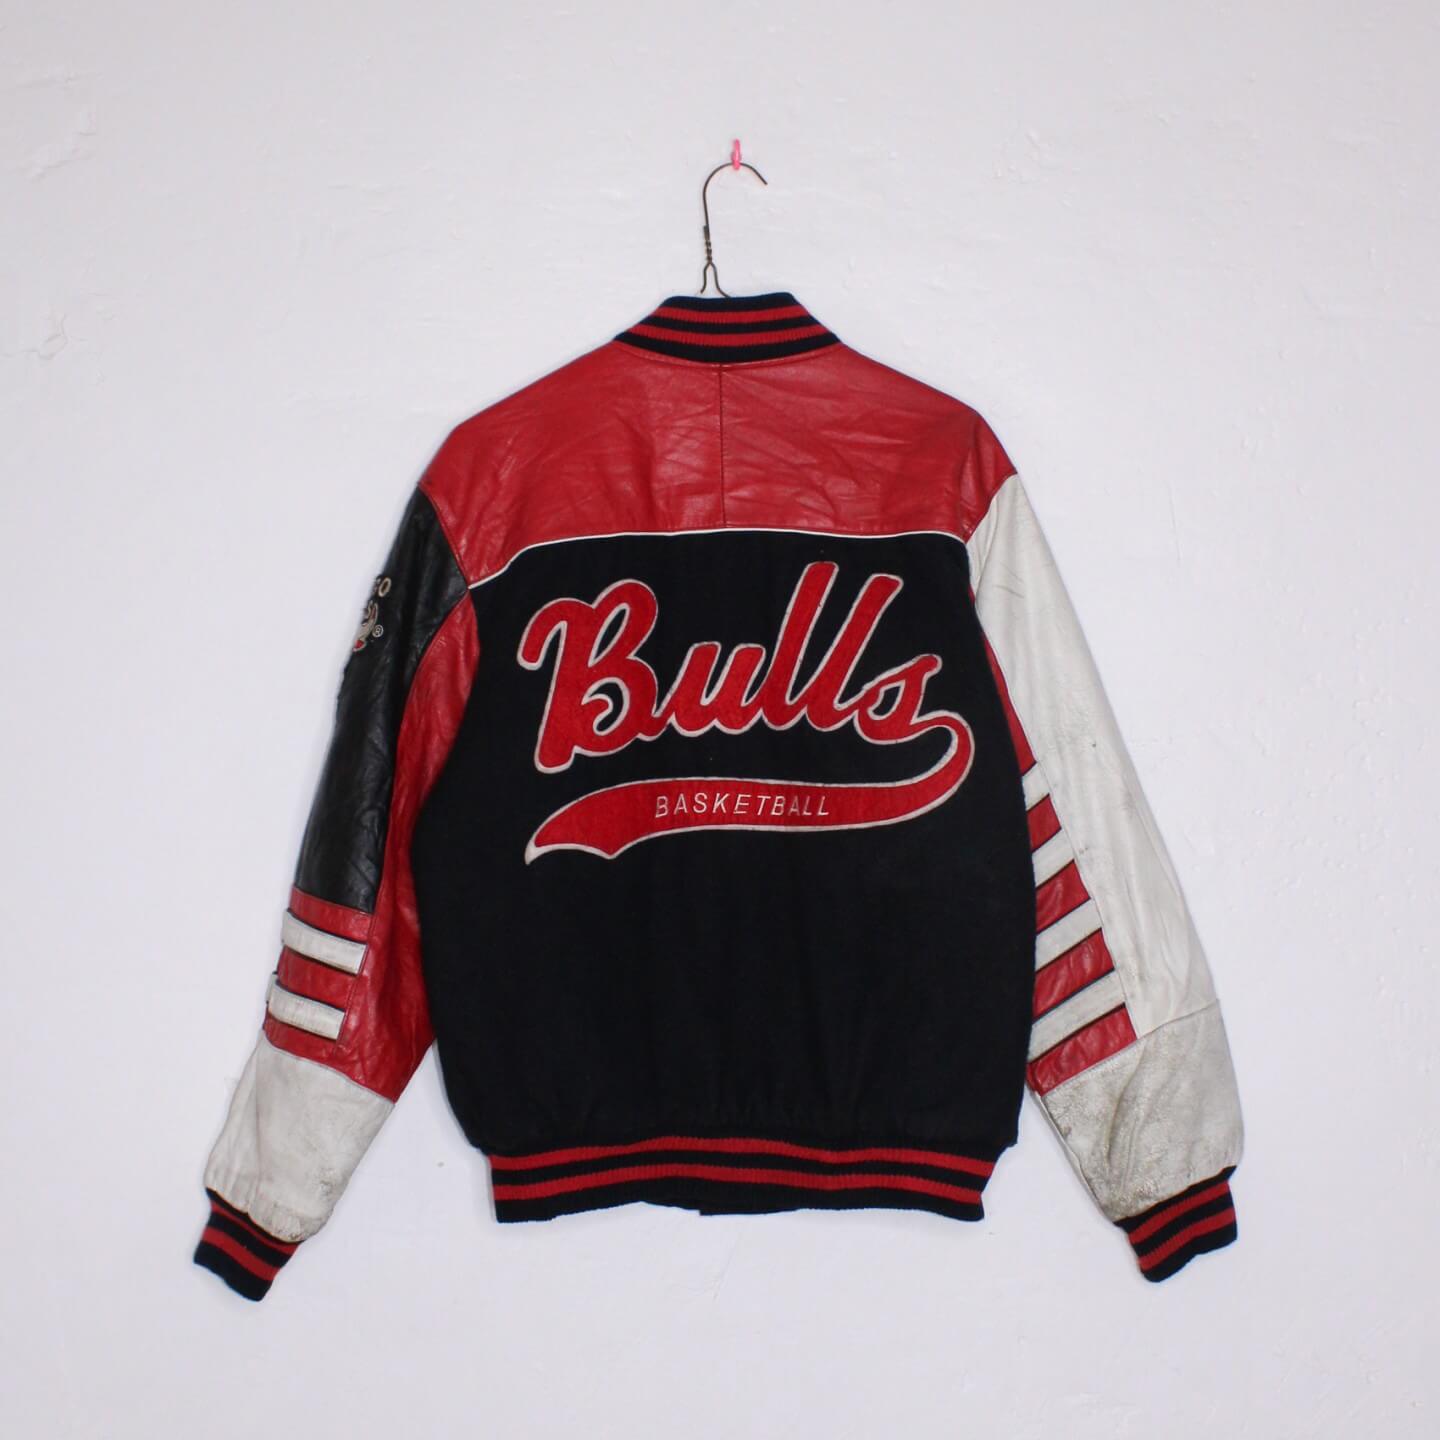 Jacket Makers Chicago Bulls Basketball College Jacket